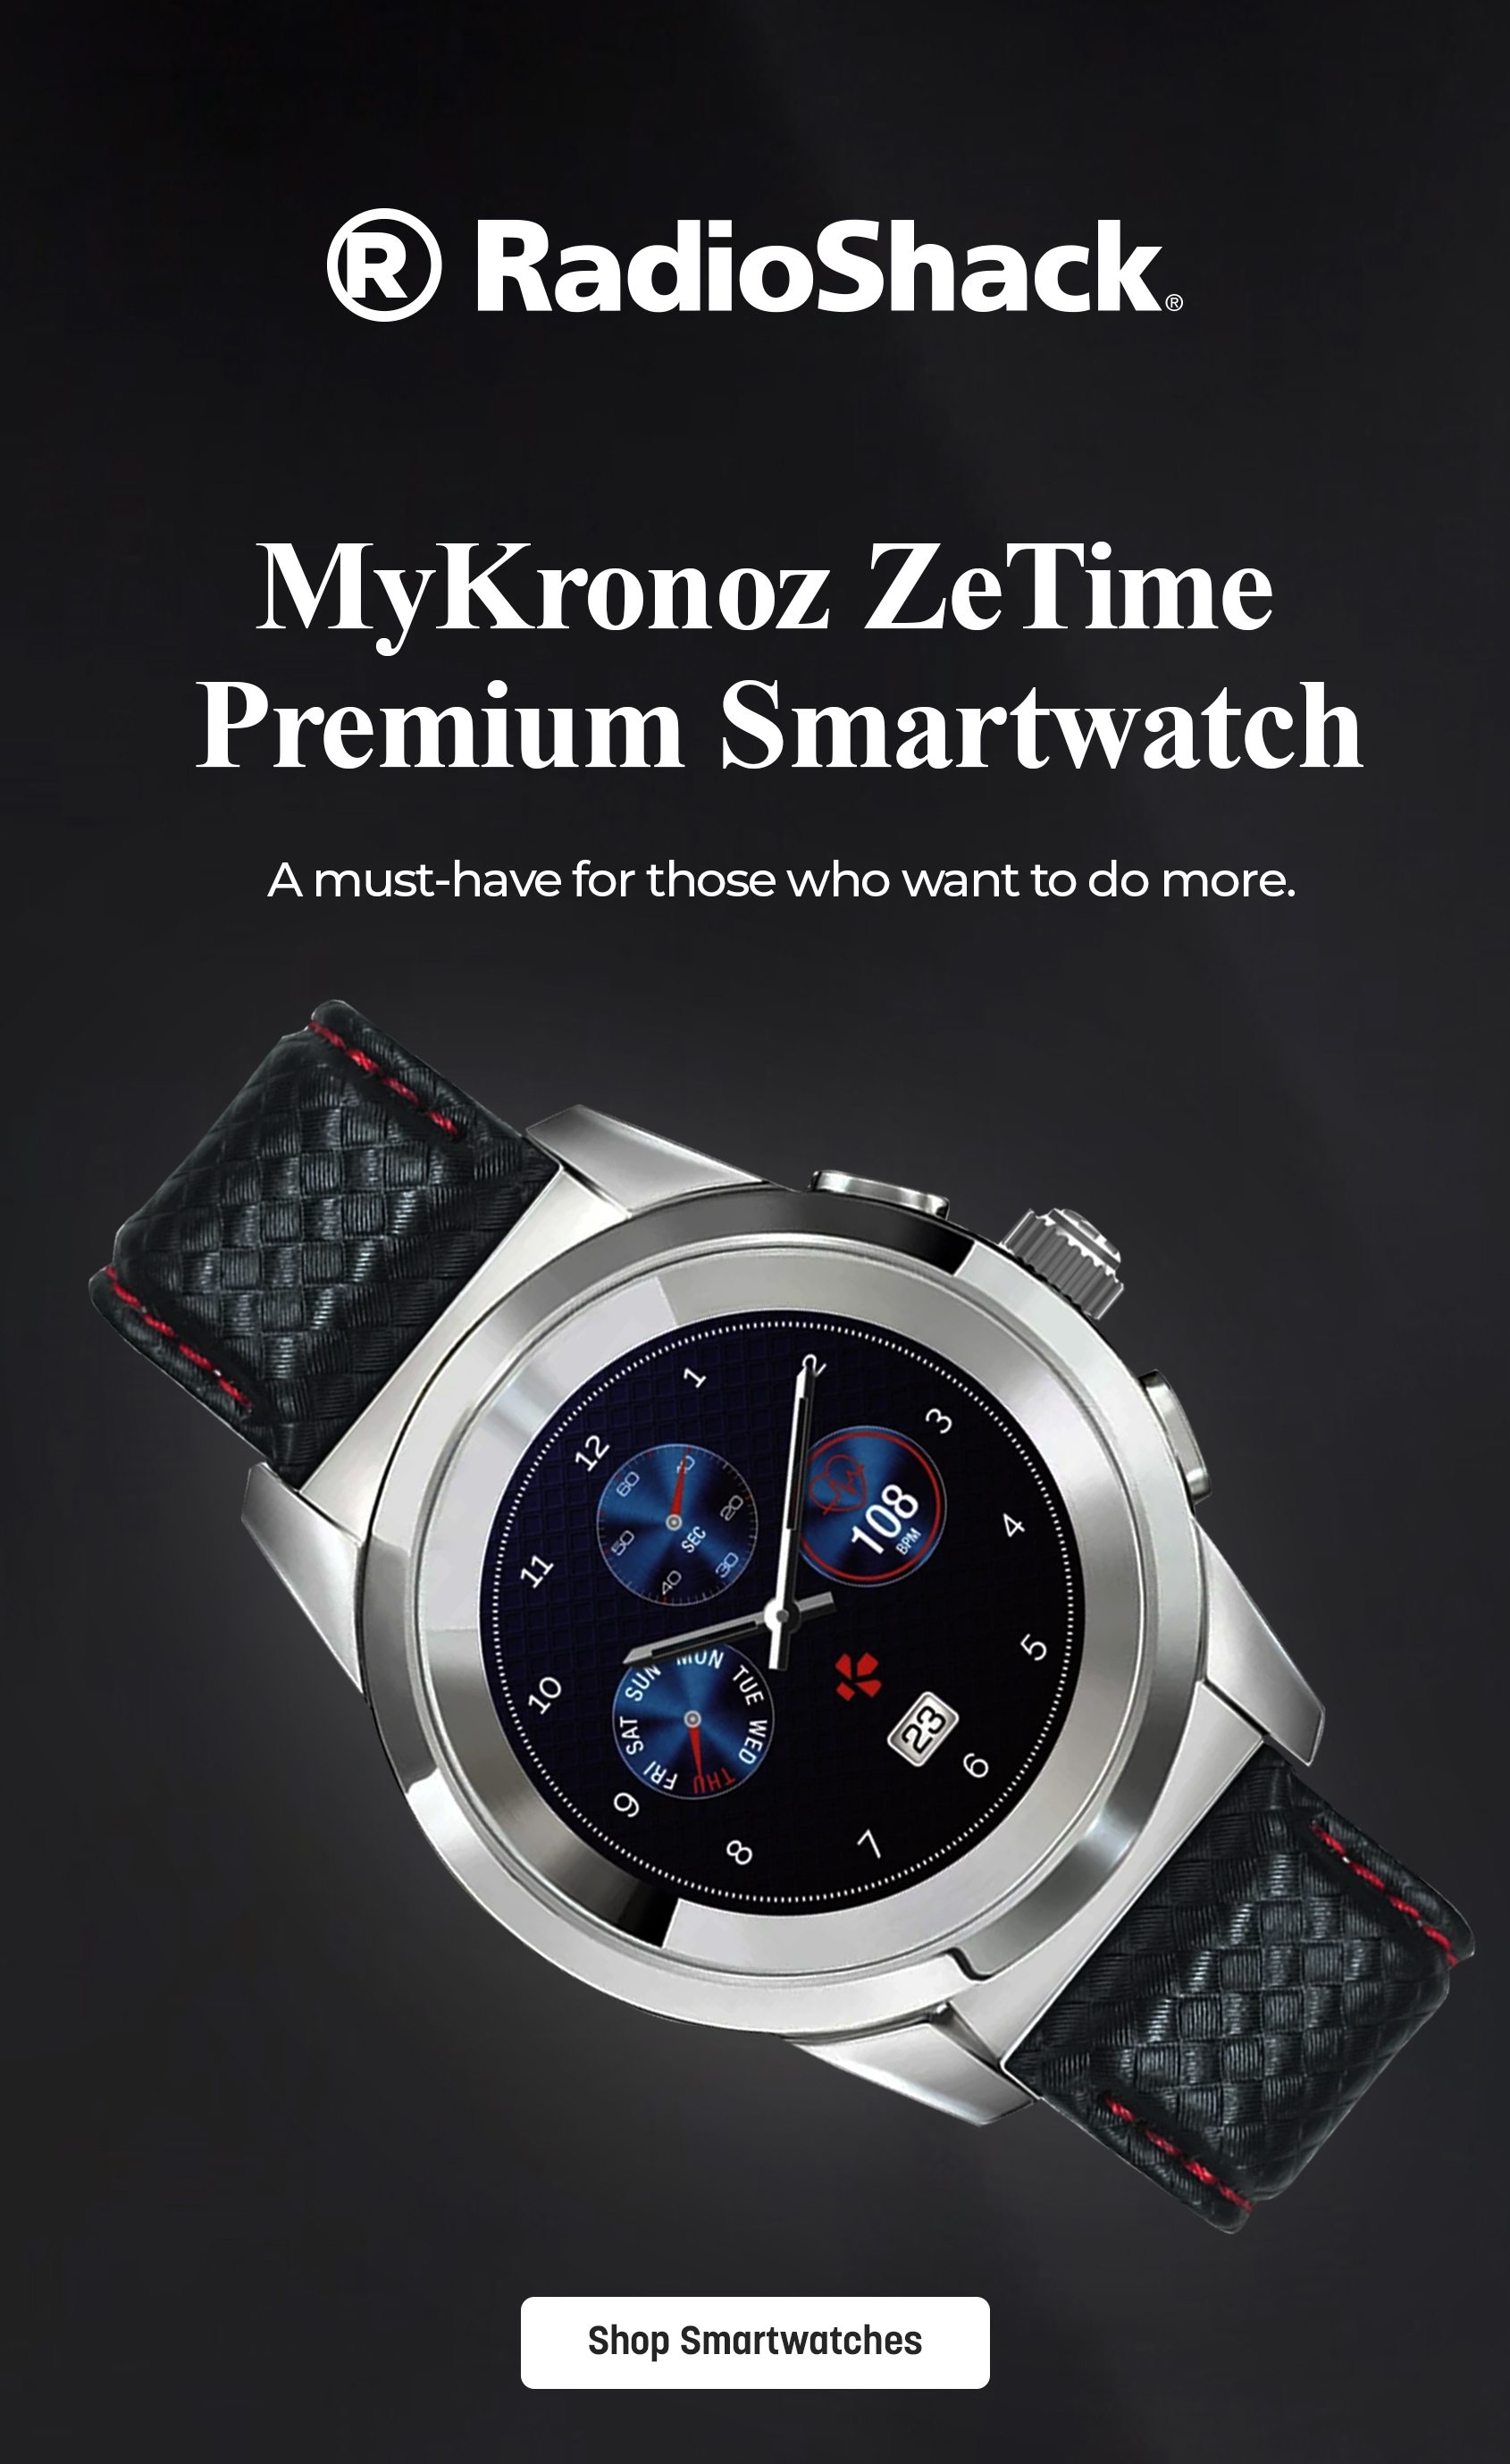 MyKronoz ZeTime Premium Smartwatch with Mechanical Hands and Touchscreen